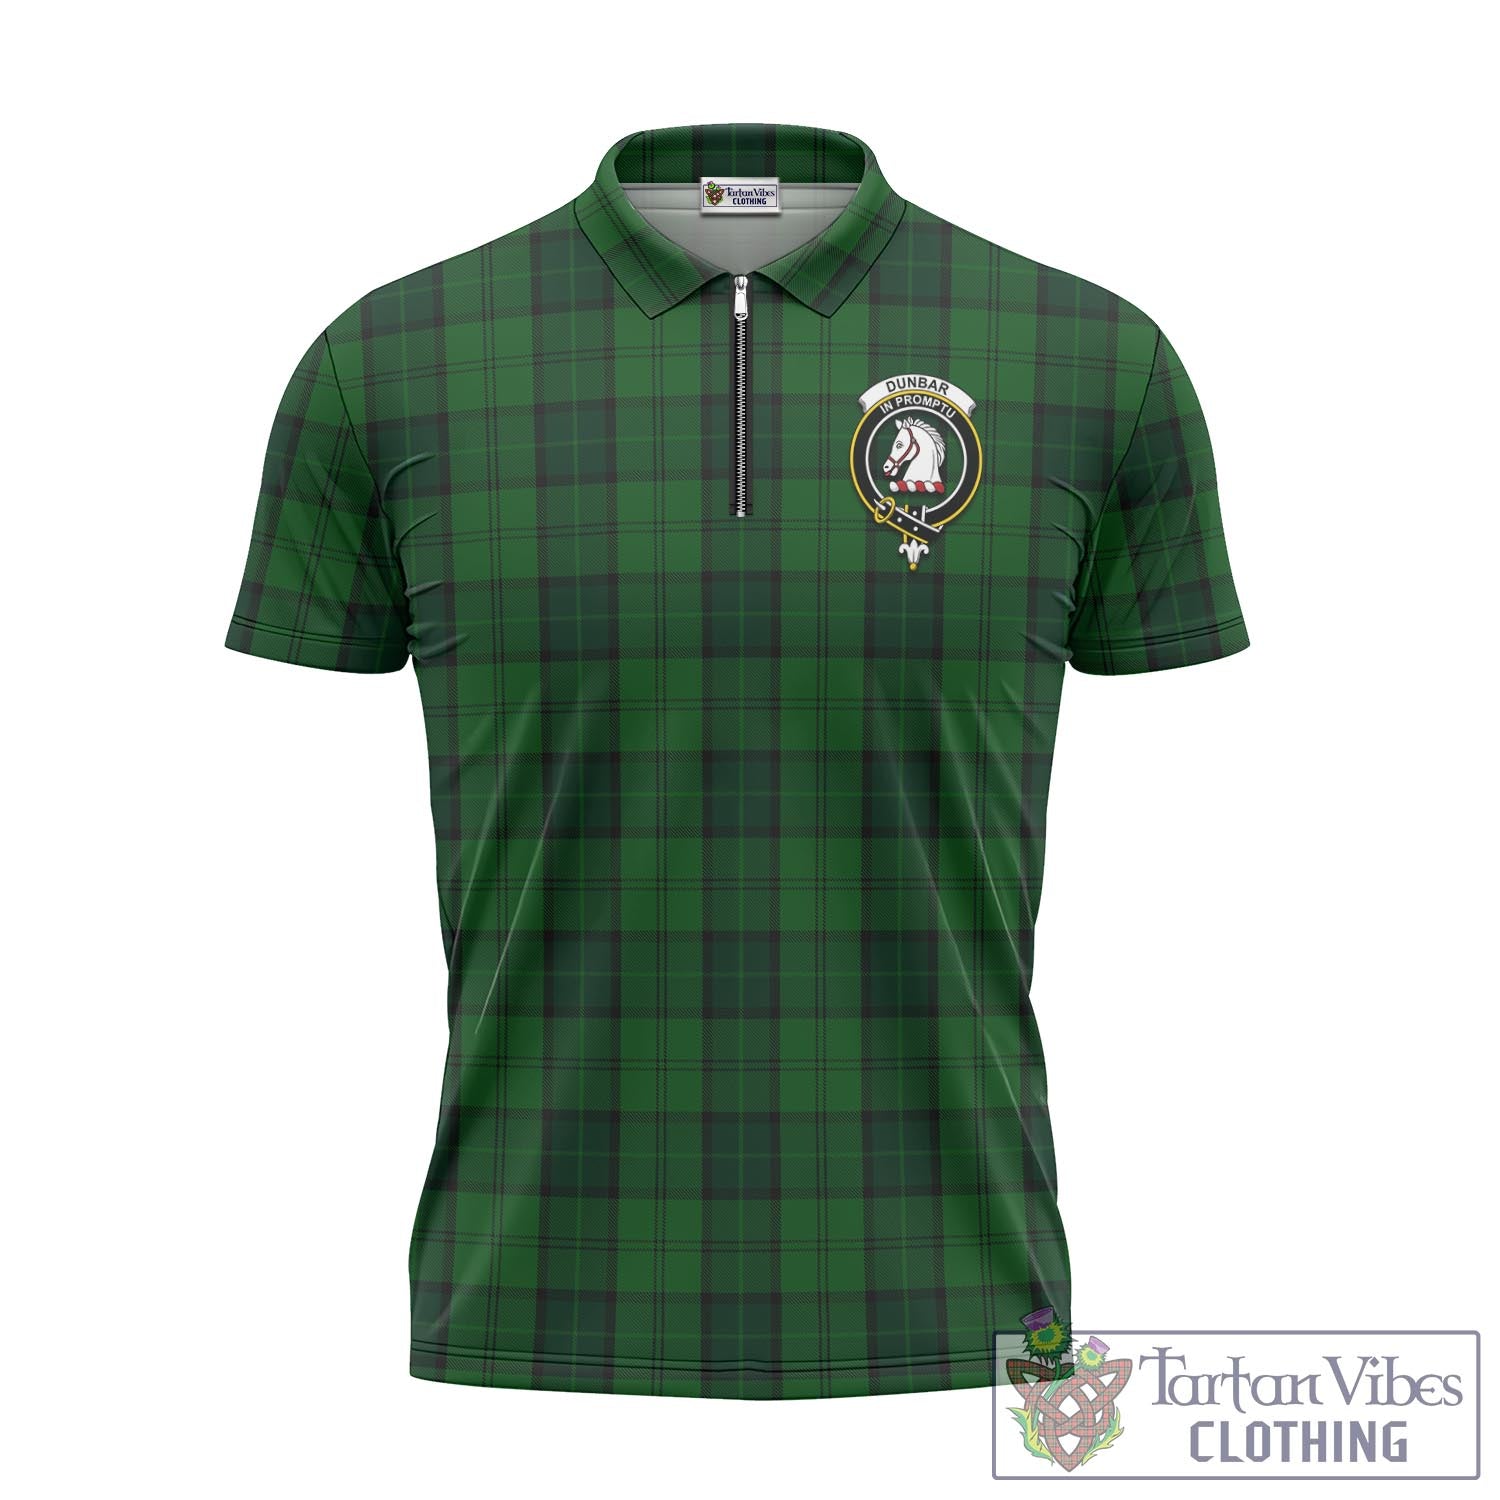 Tartan Vibes Clothing Dunbar Hunting Tartan Zipper Polo Shirt with Family Crest